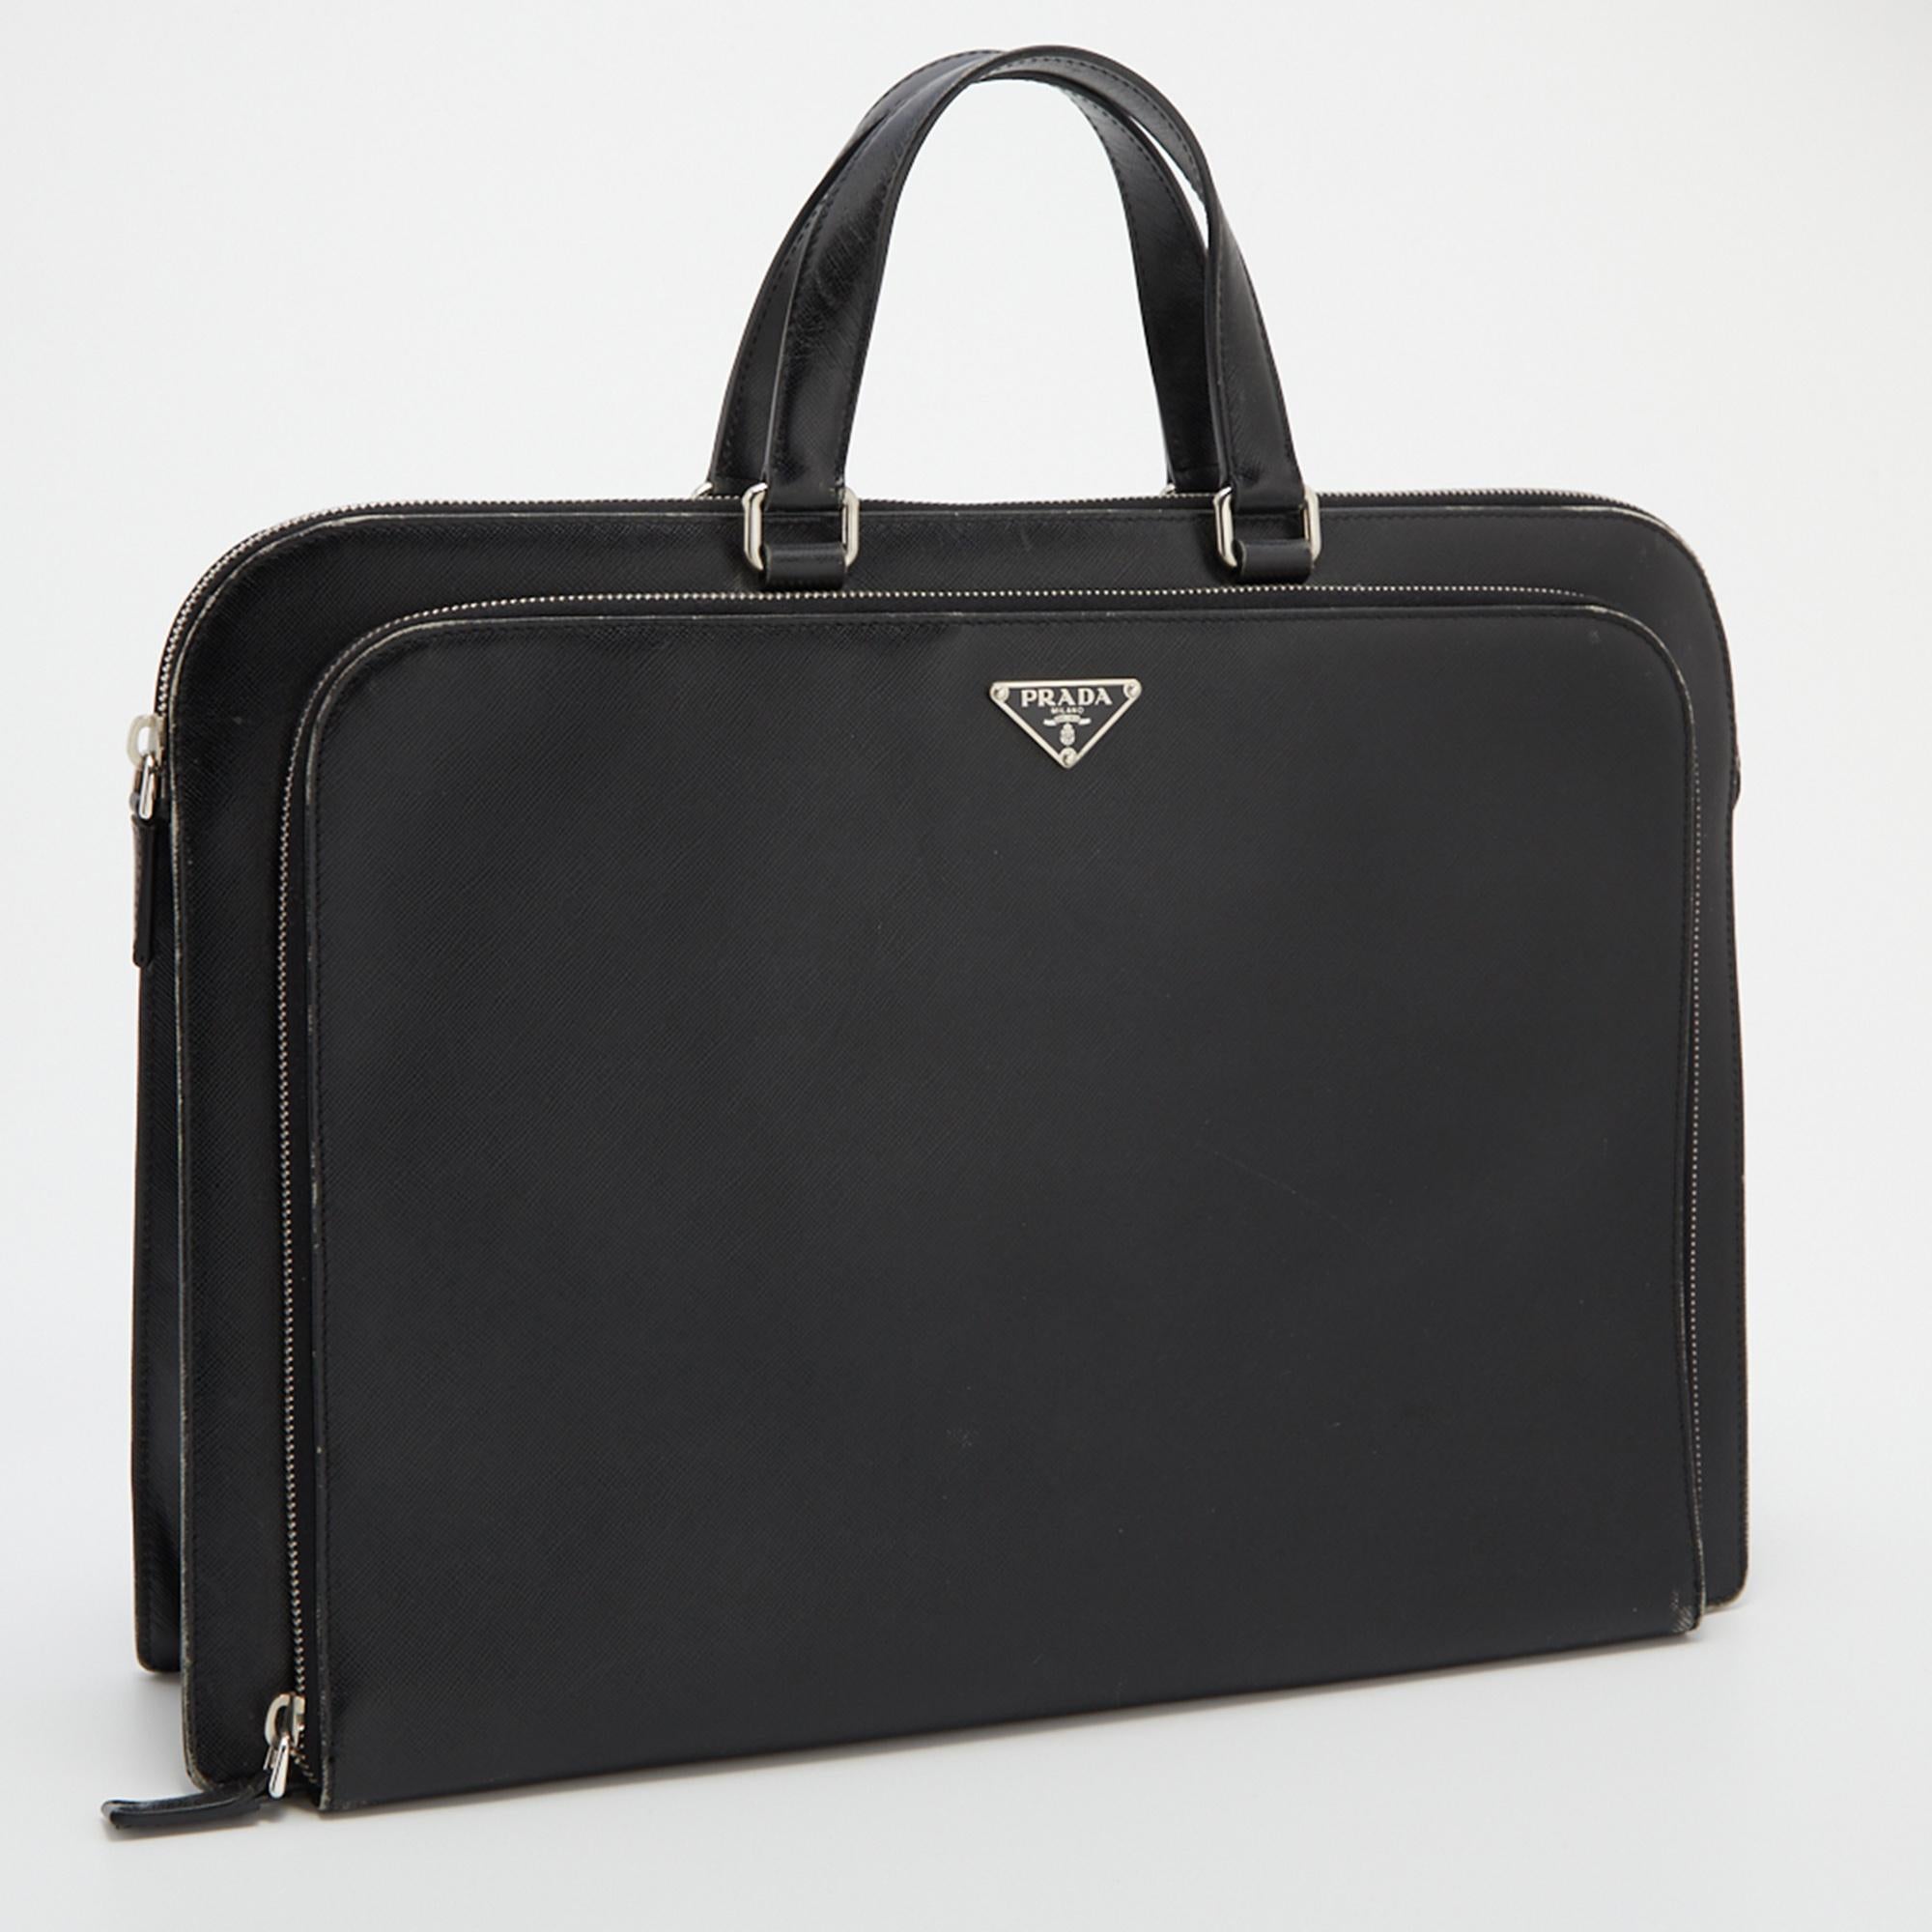 Prada Black Saffiano Leather Laptop Bag 7